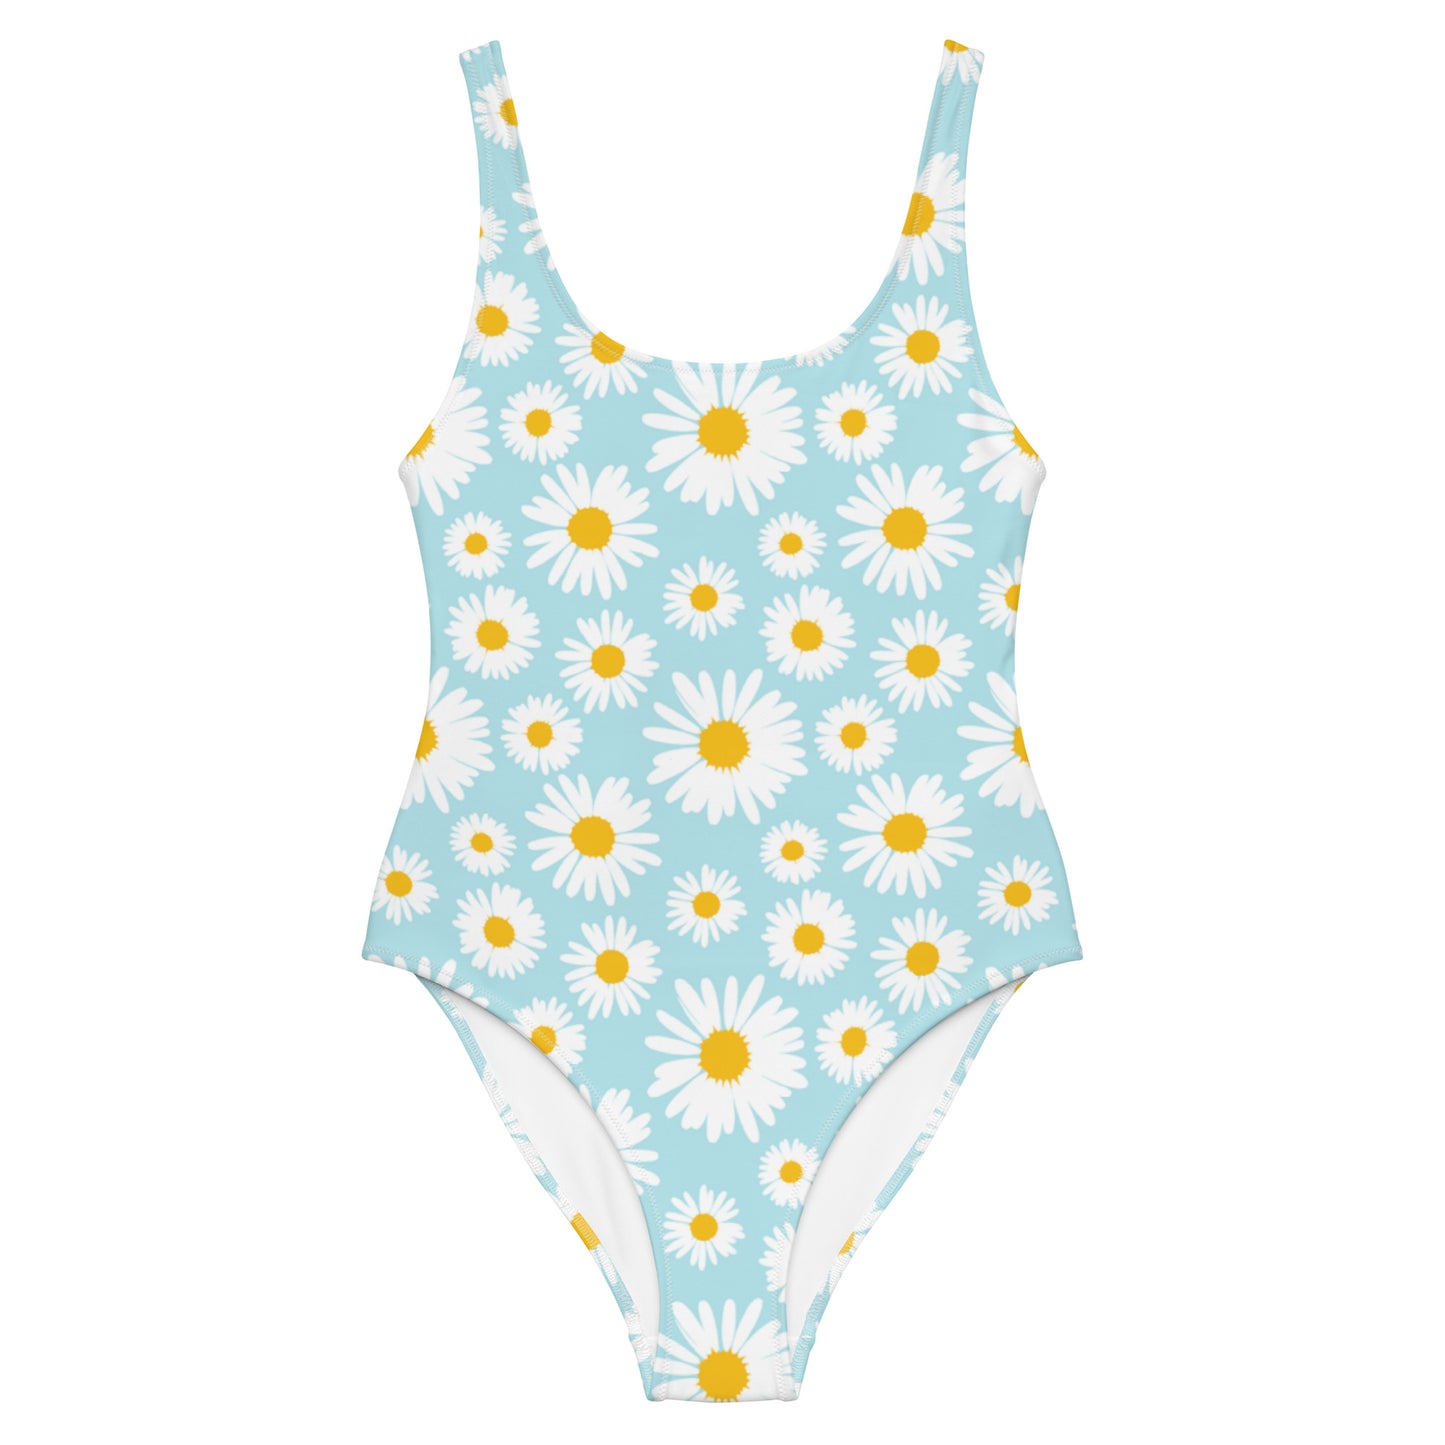 Daisy Blue One-Piece Swimsuit